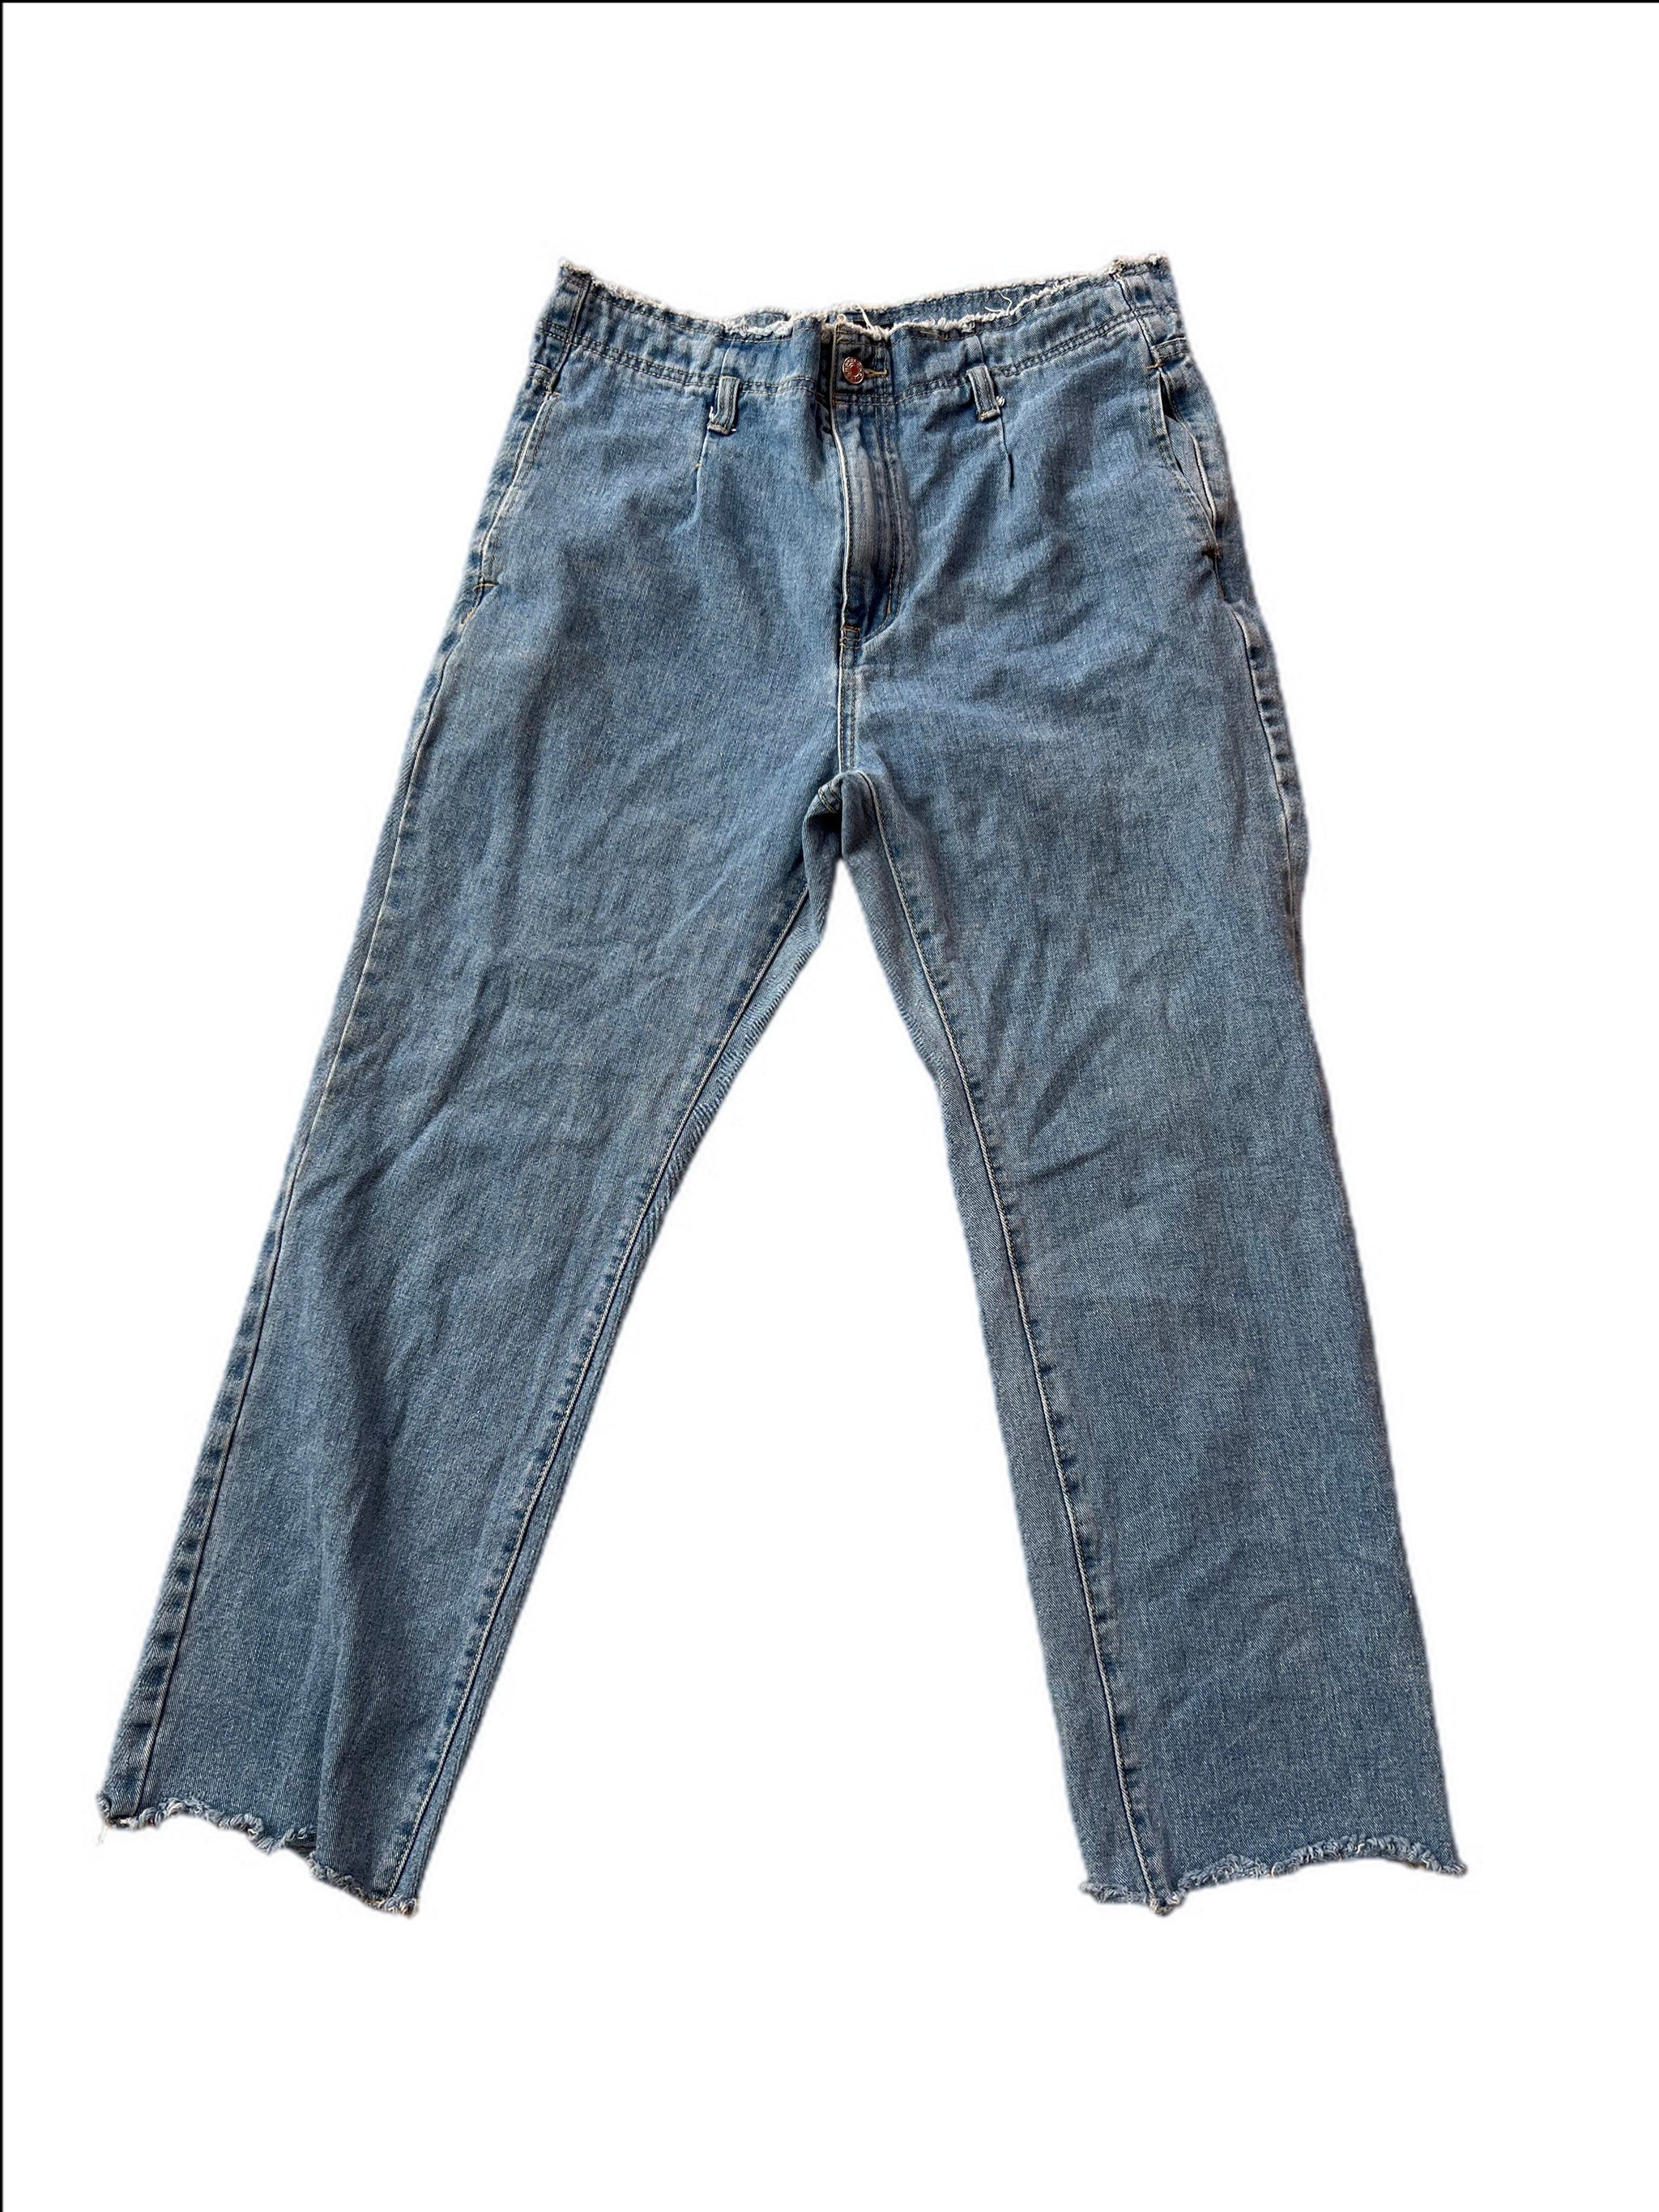 Dunnes Stores  Denim Savida High Waisted Skinny Jeans